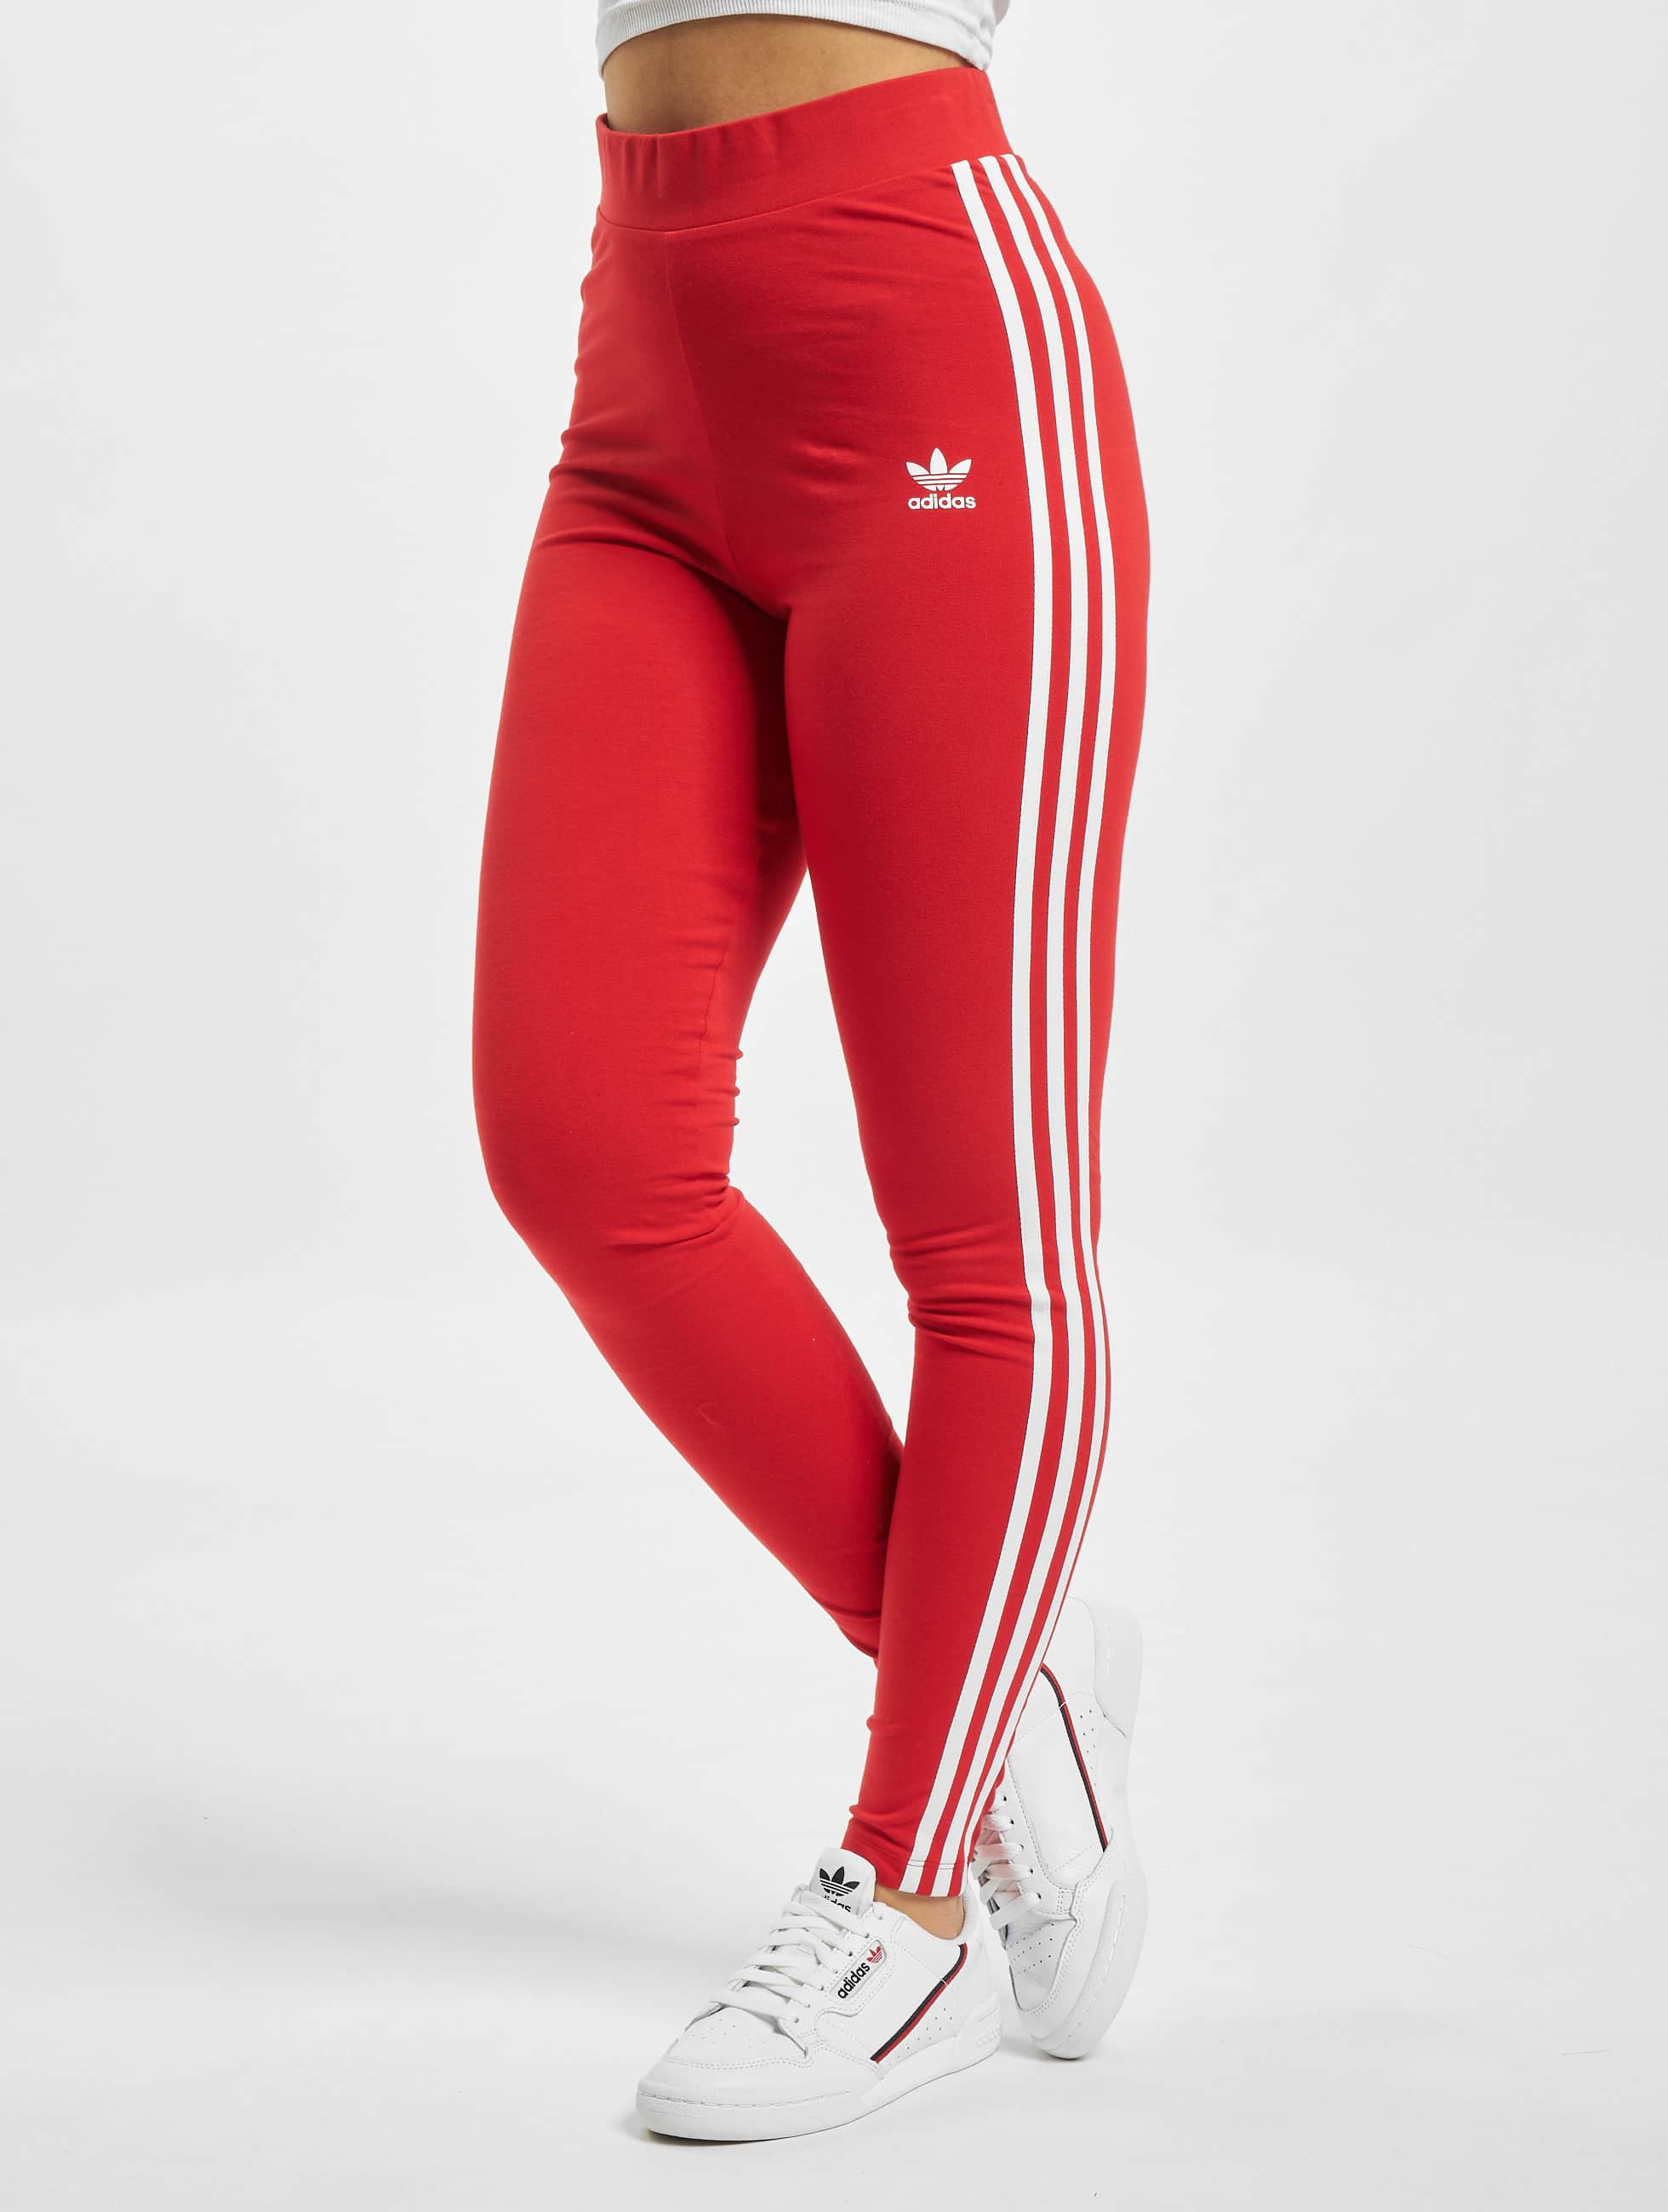 ik draag kleding Absorberend aanpassen adidas Originals broek / Legging 3 Stripes in rood 806241